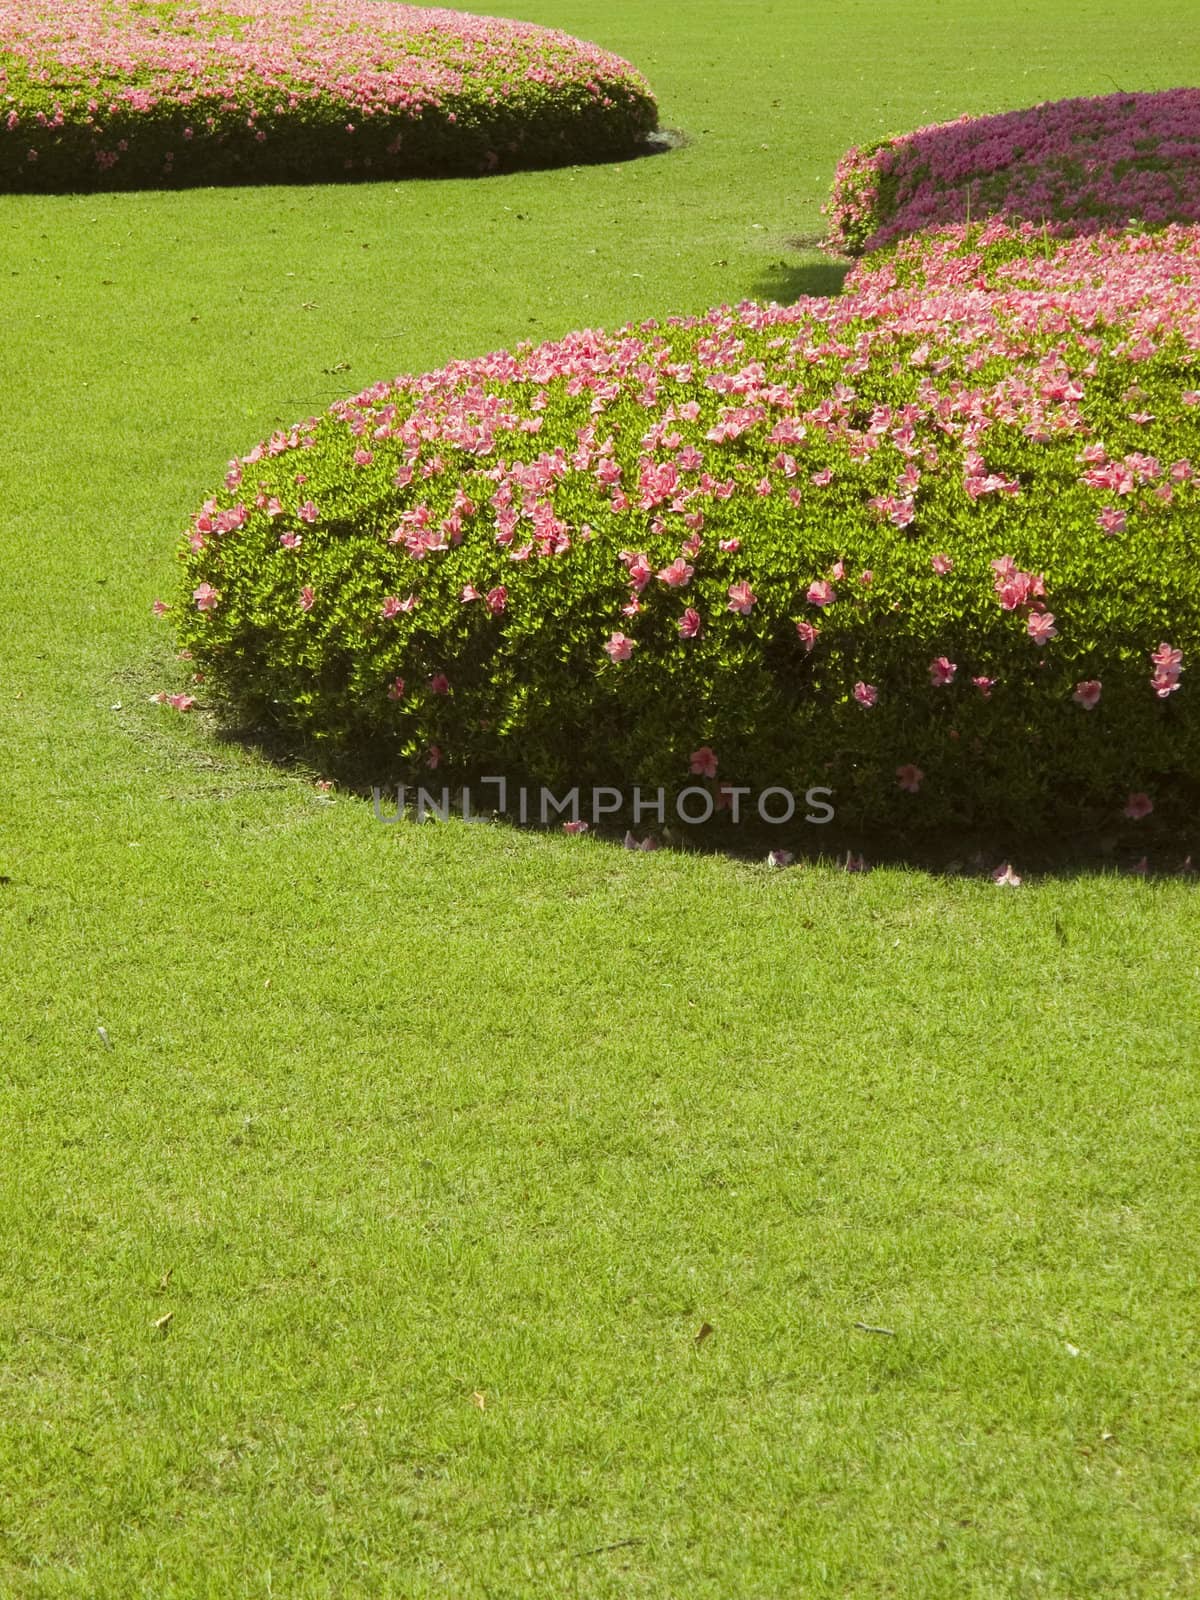 fresh green short-cut grass lawn with blossom azalea -rhododendron bushes